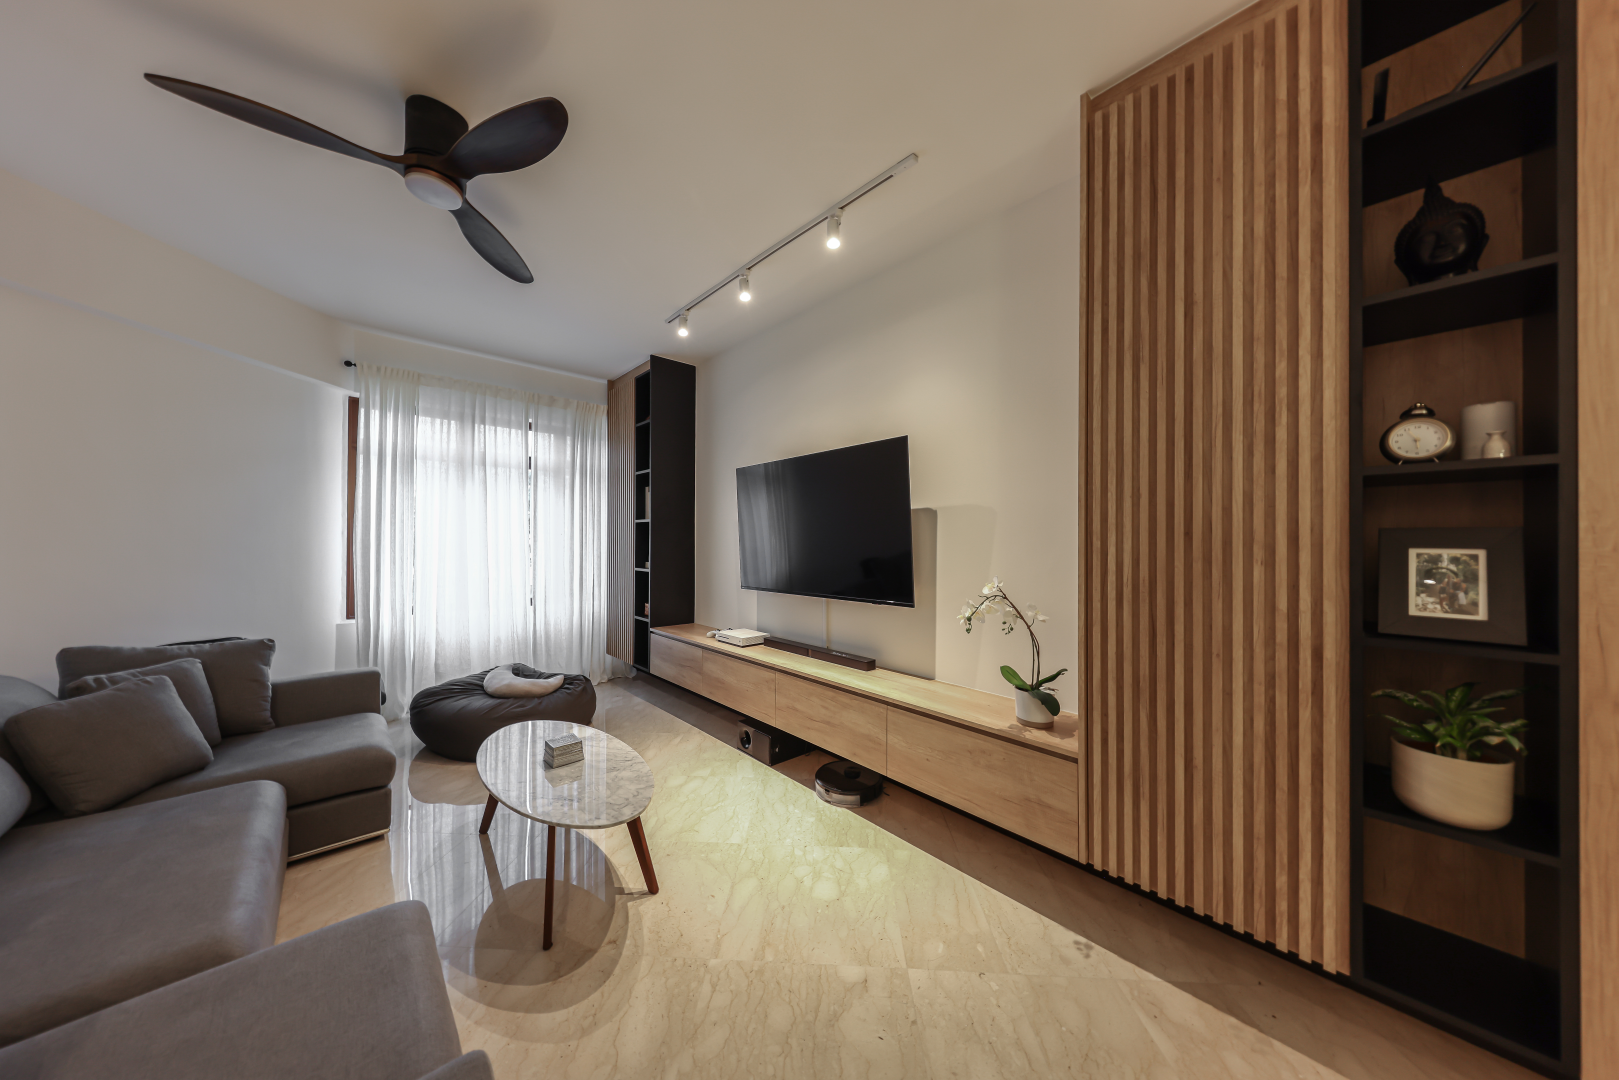 13 Unique Interior Design Ideas and Home Decor Inspirations for 2022